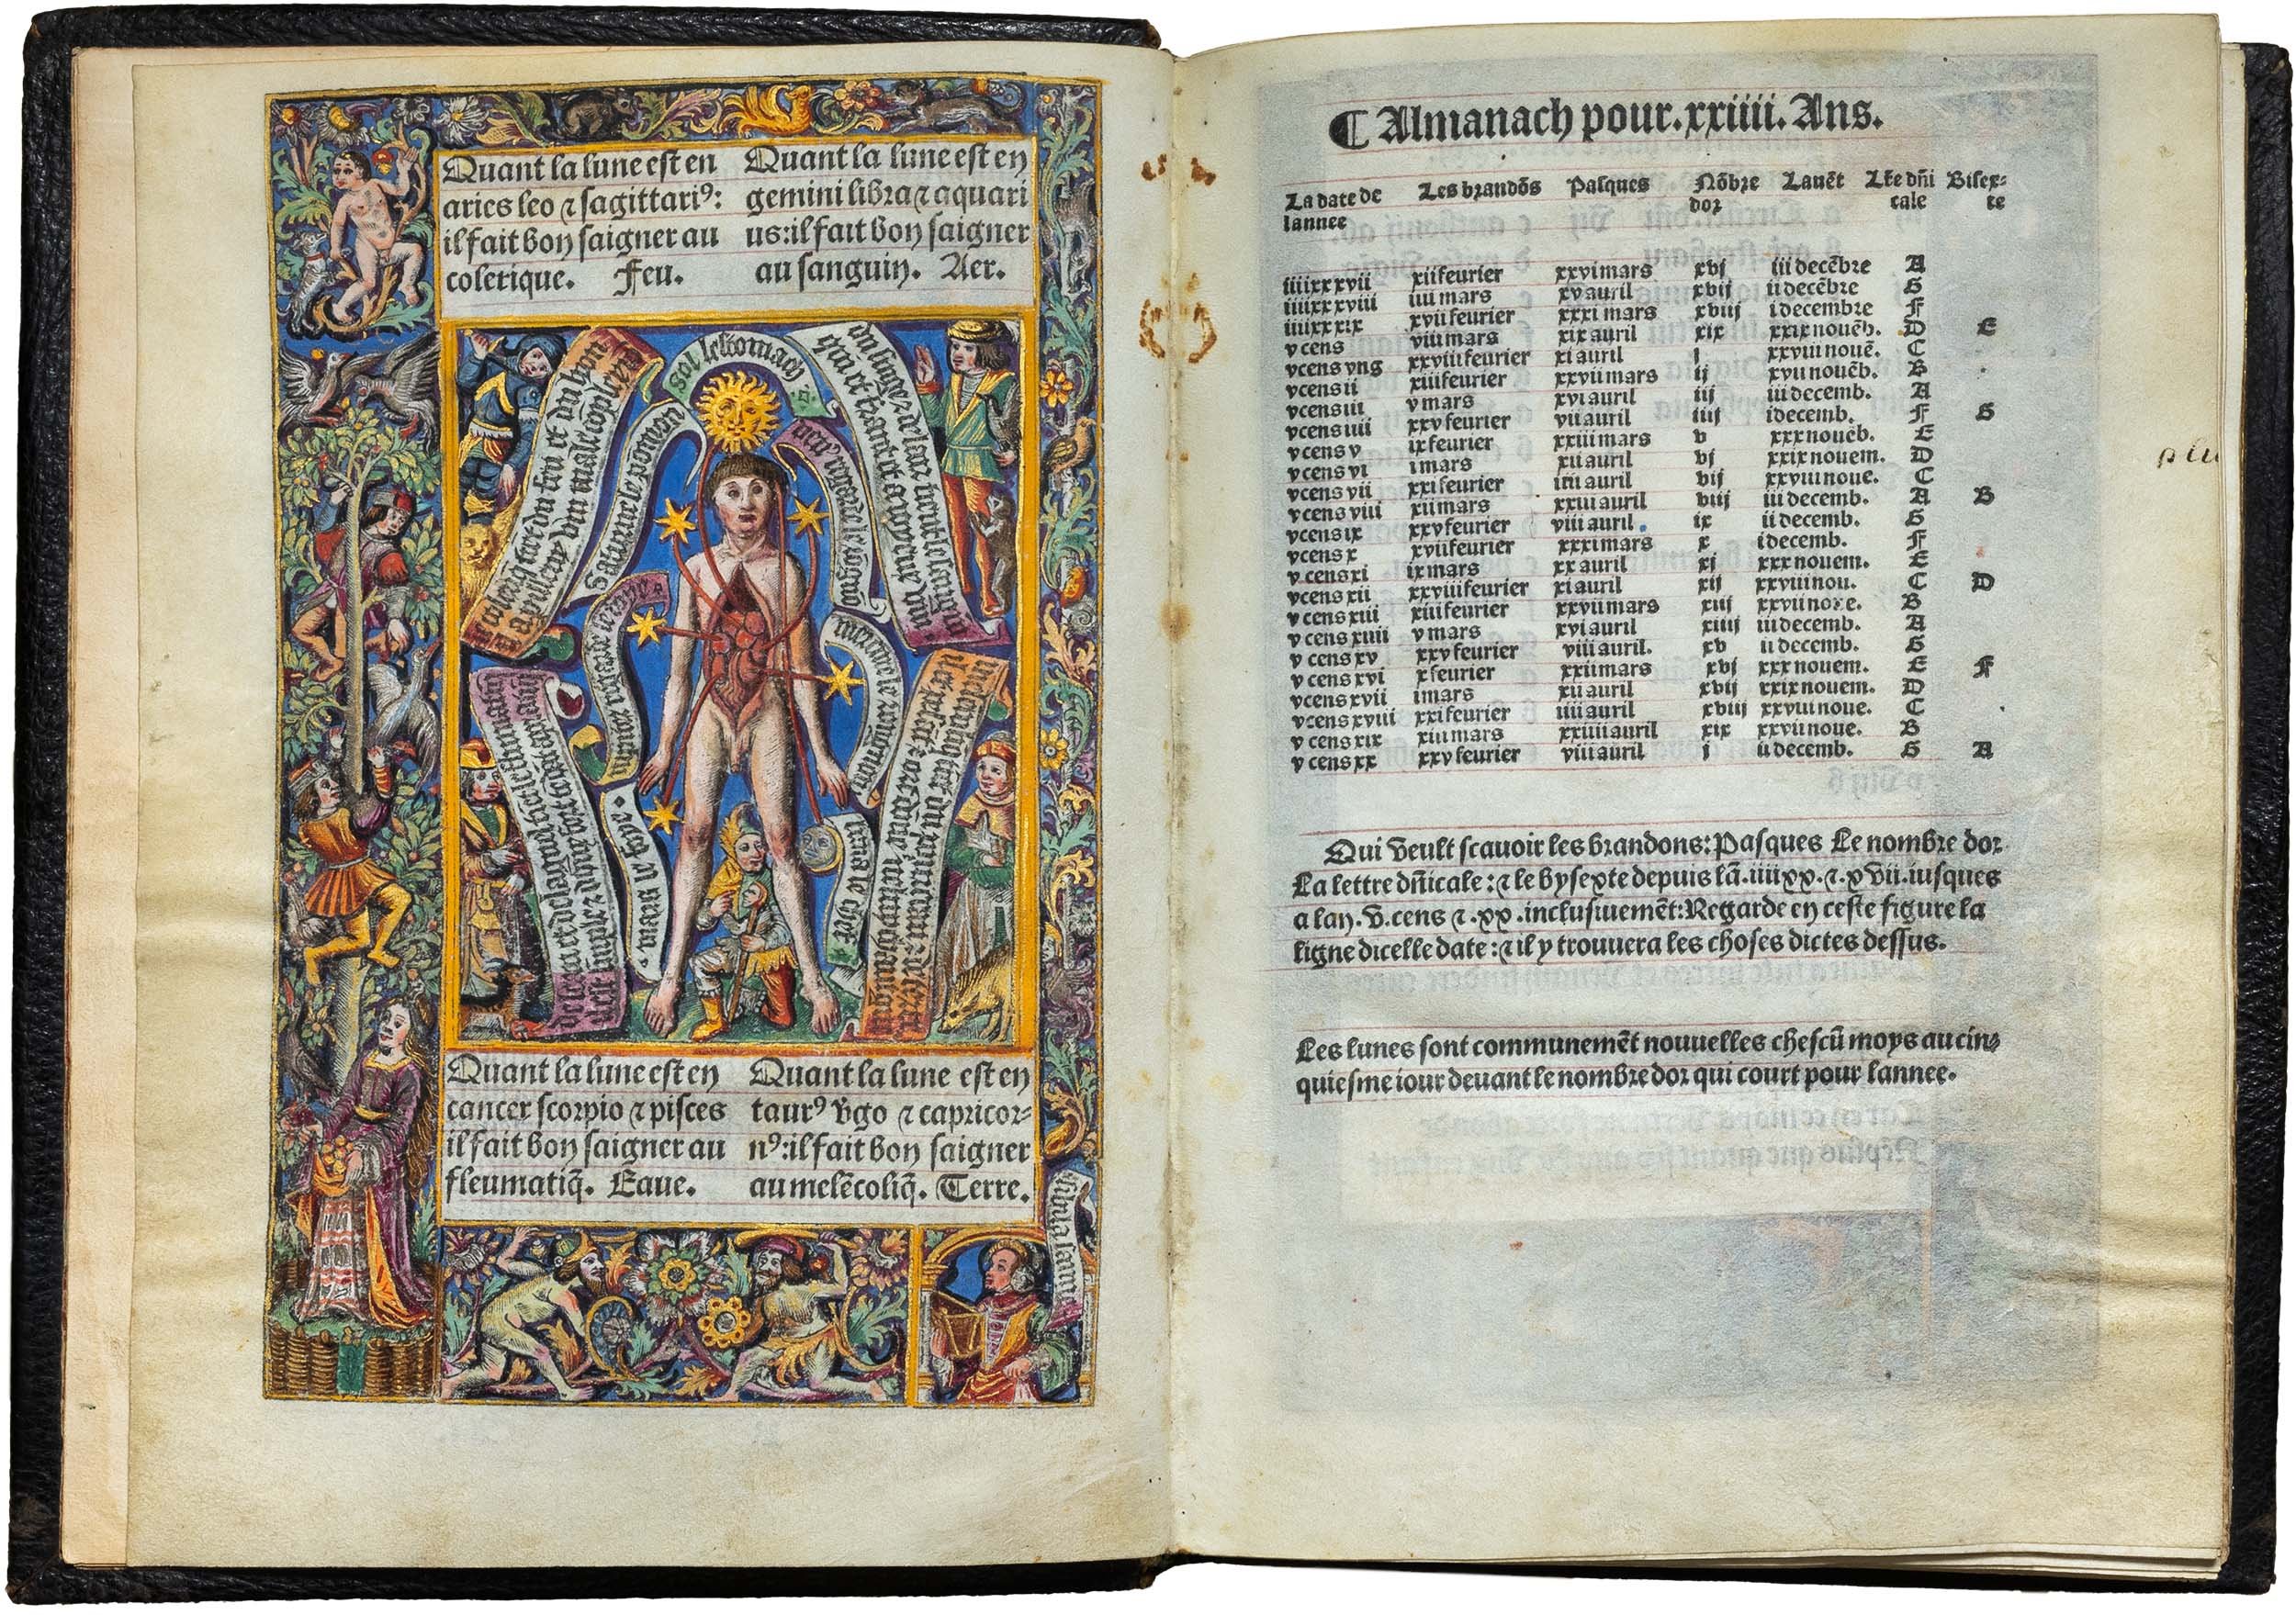 Printed-Book-of-Hours-10-january-1503-horae-bmv-kerver-remacle-illuminated-vellum-copy-schönborn-buchheim-05.jpg